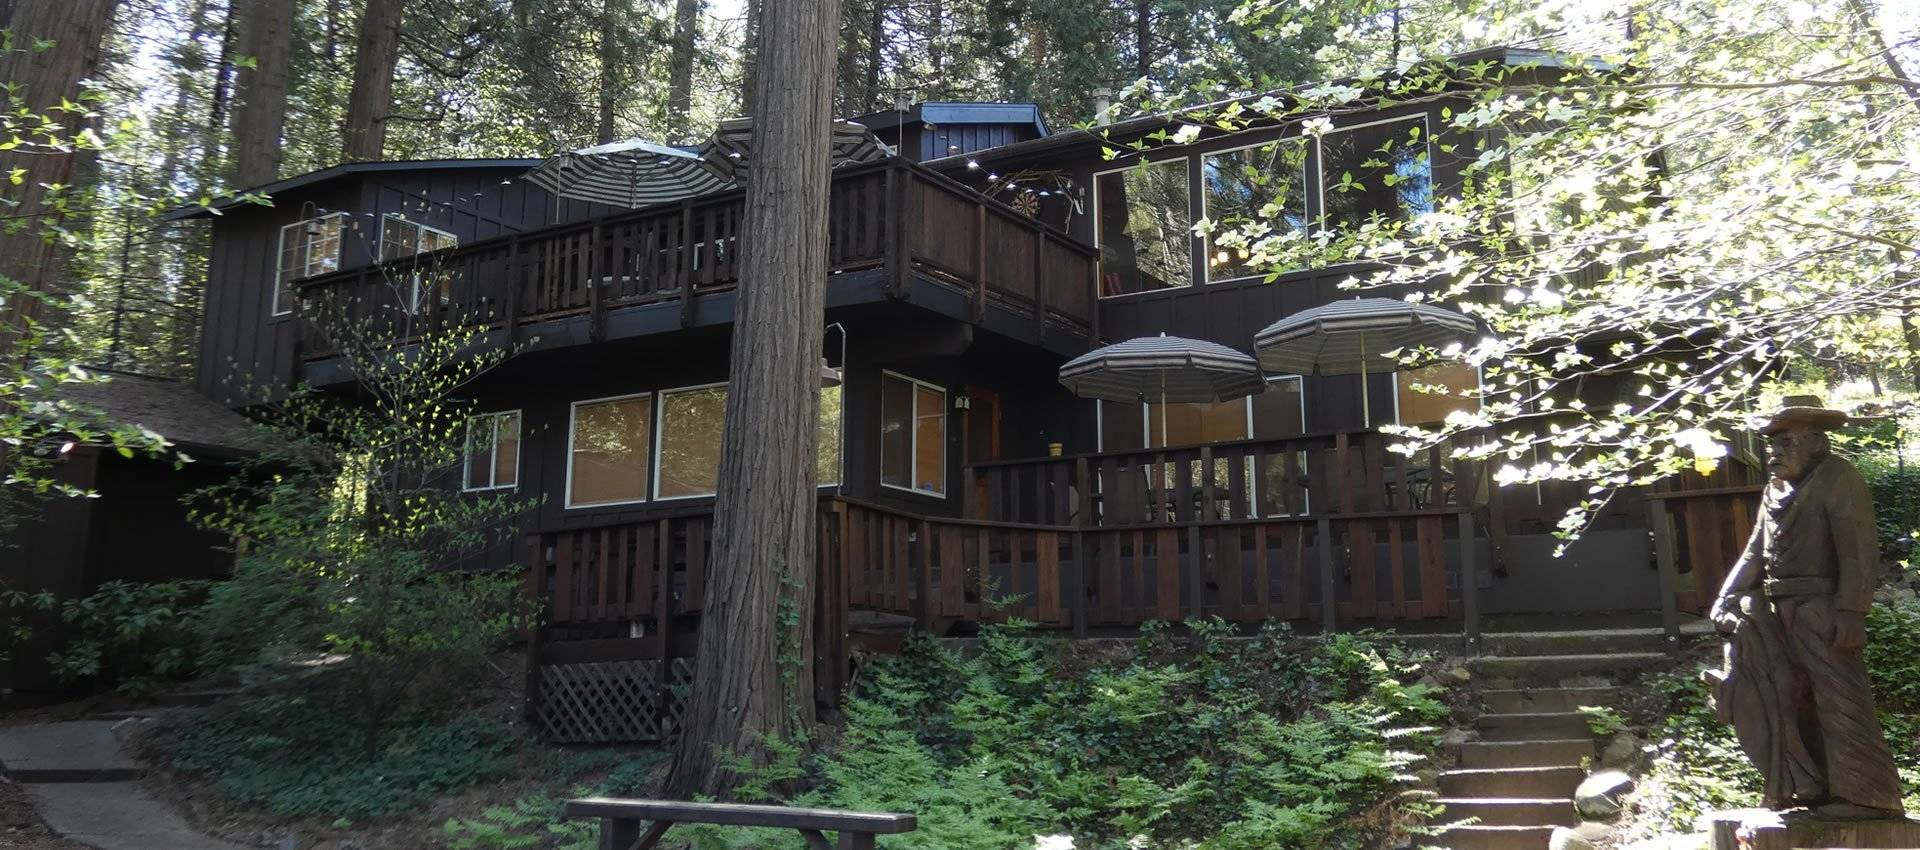 Twain Harte Vacation Cabin Rentals Family Sunset BG